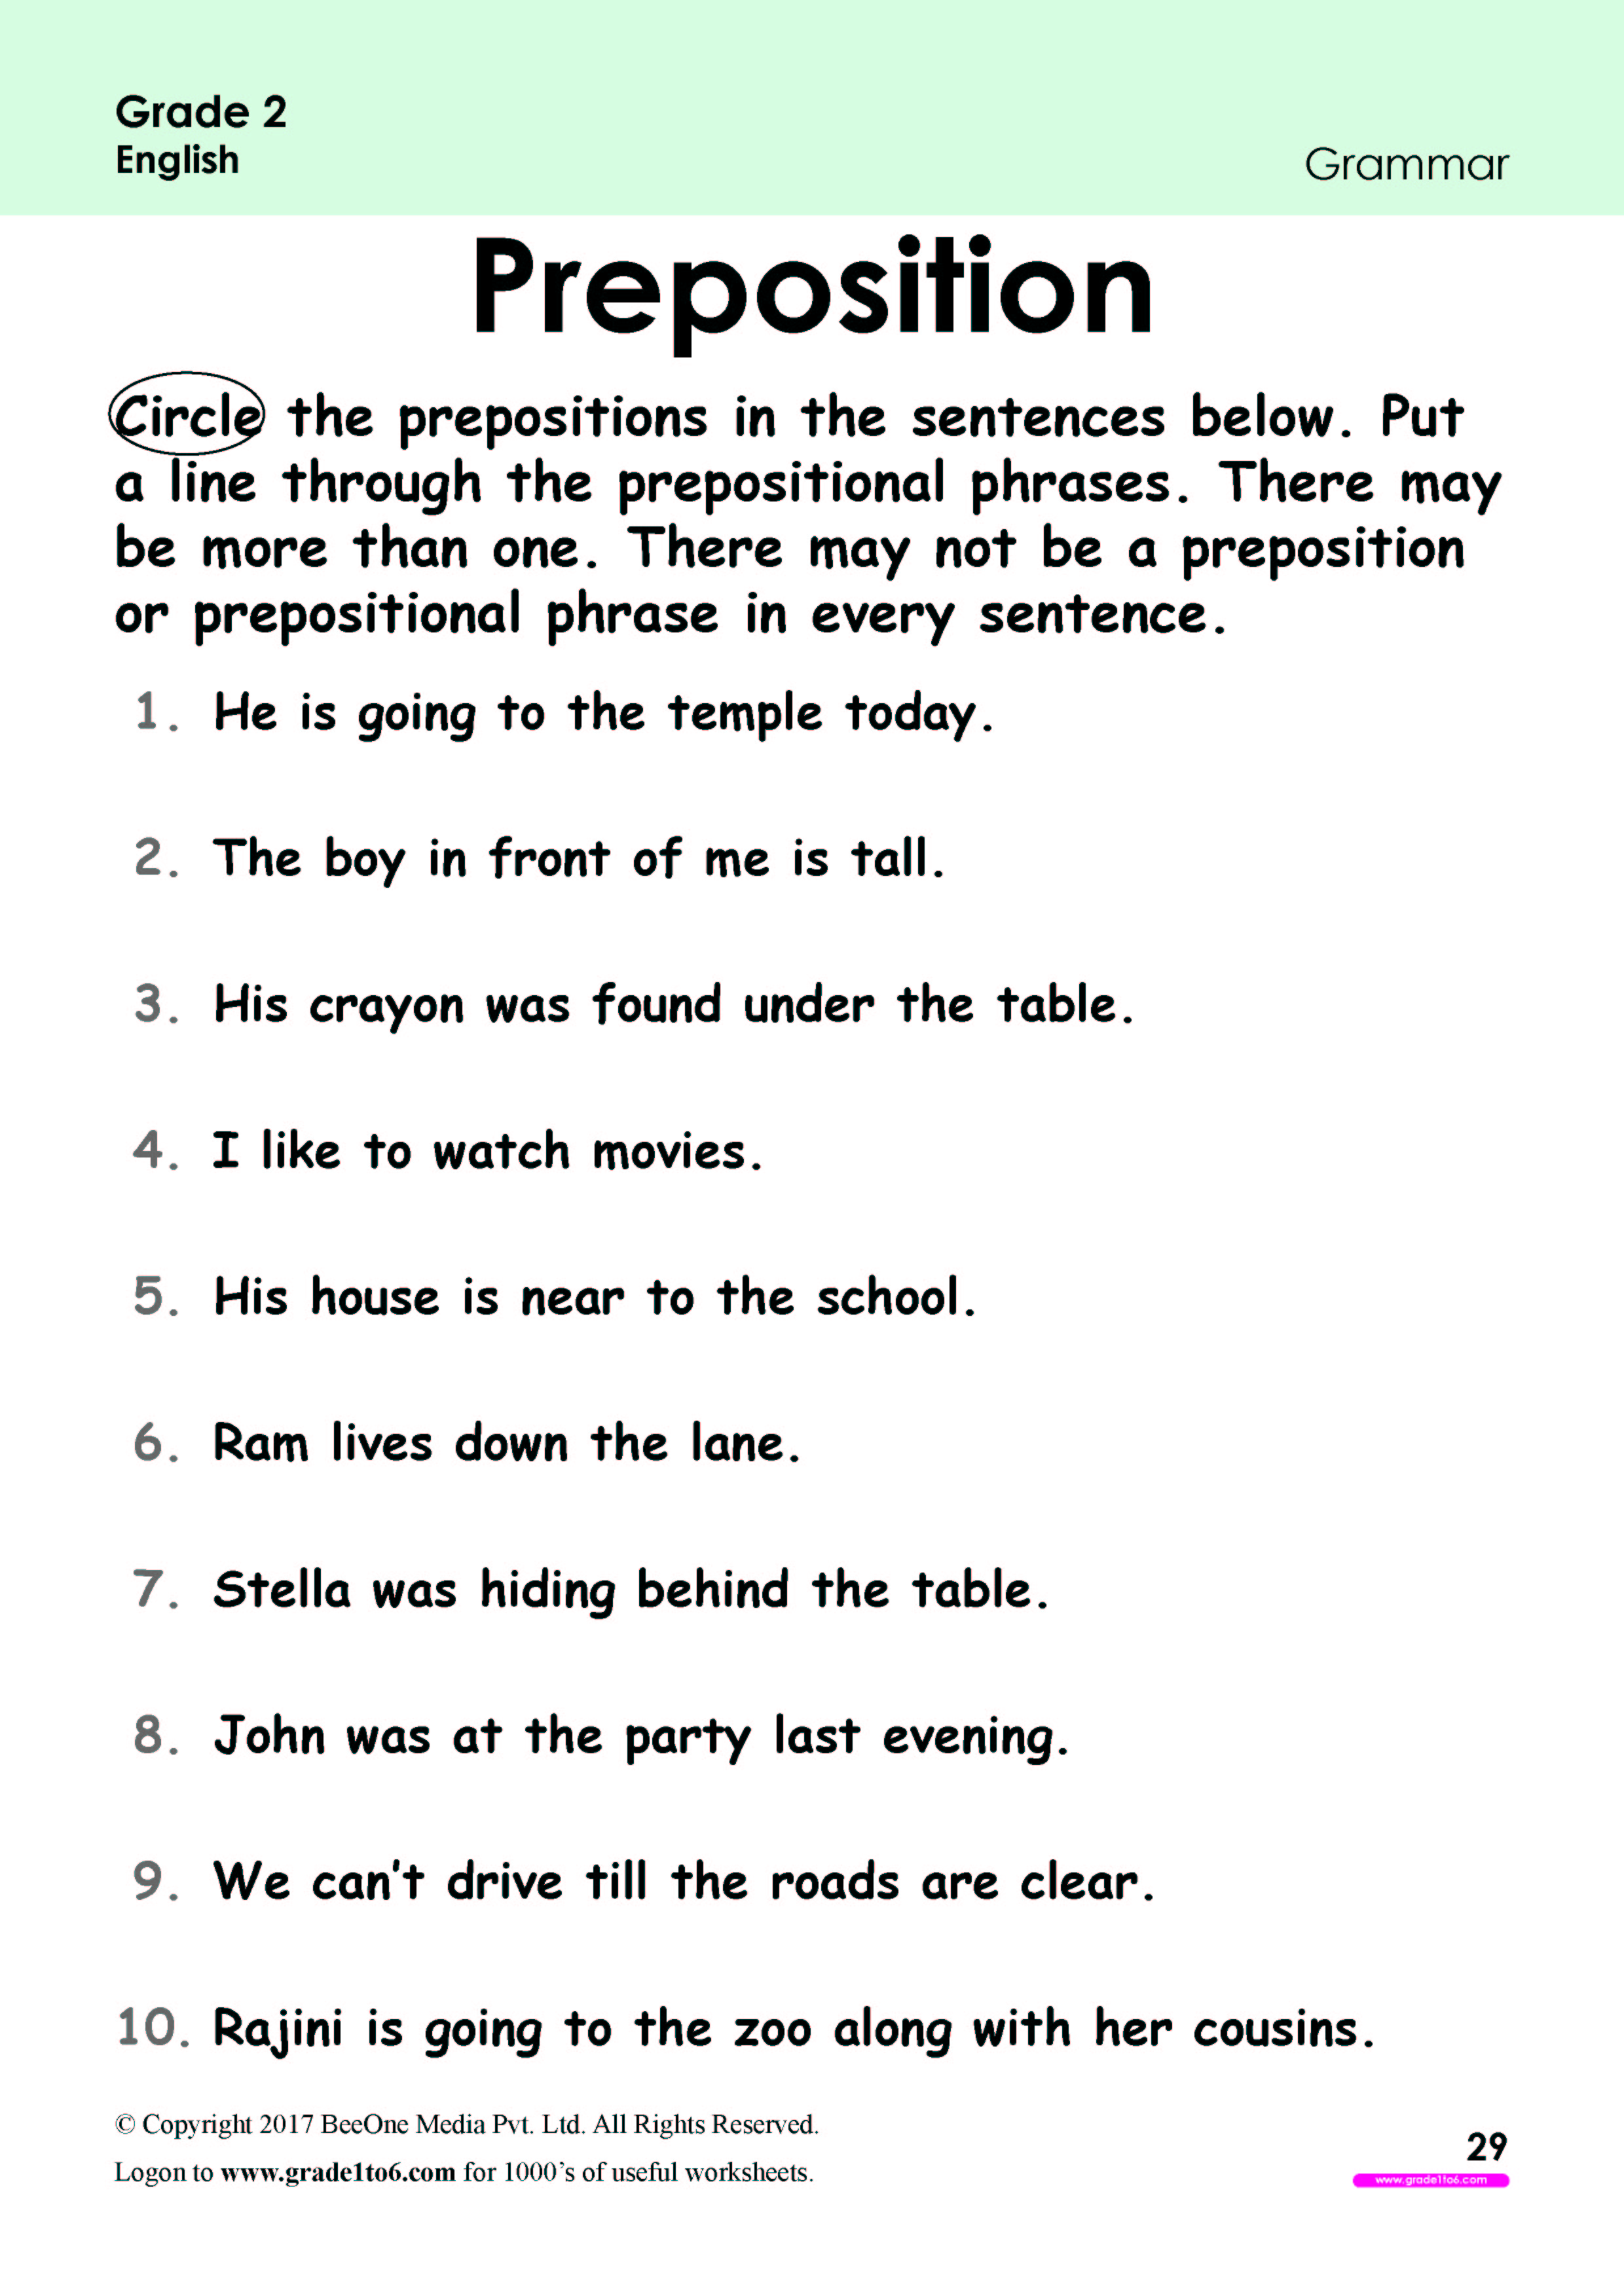 200-preposition-exercises-ideas-prepositions-preposition-worksheets-english-grammar-worksheets